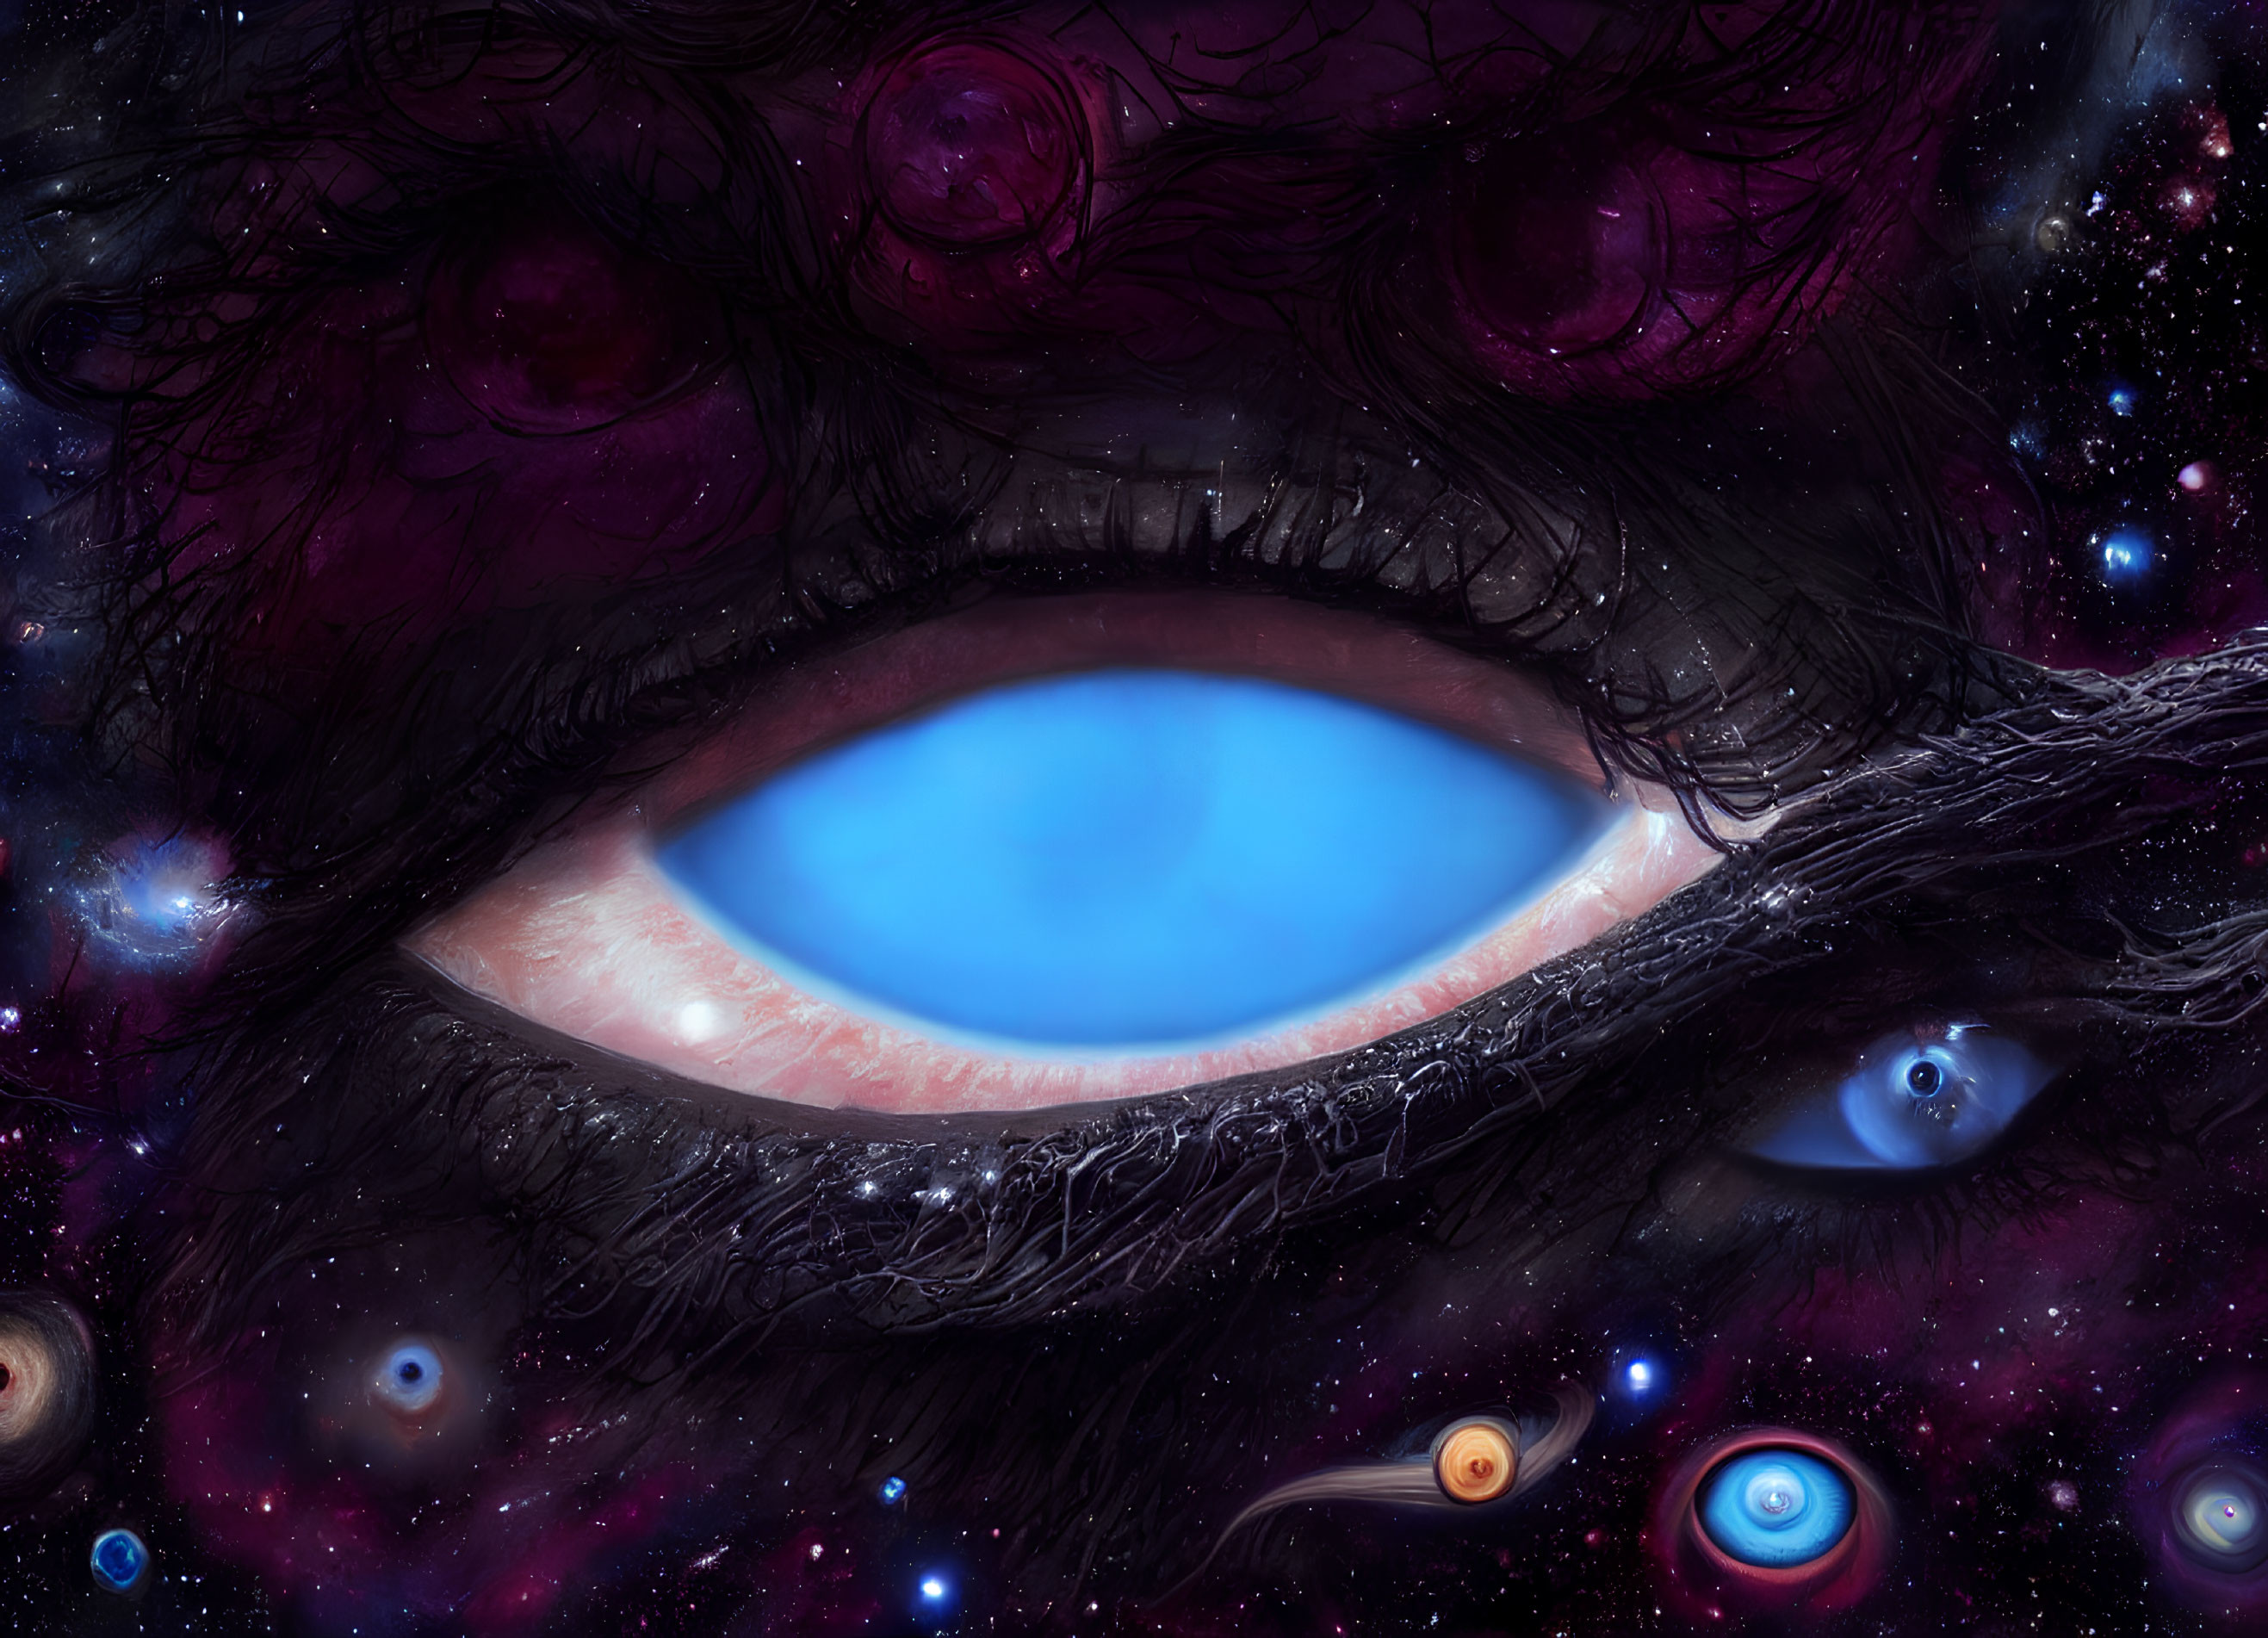 Celestial-themed cosmic artwork with large blue eye and nebulae